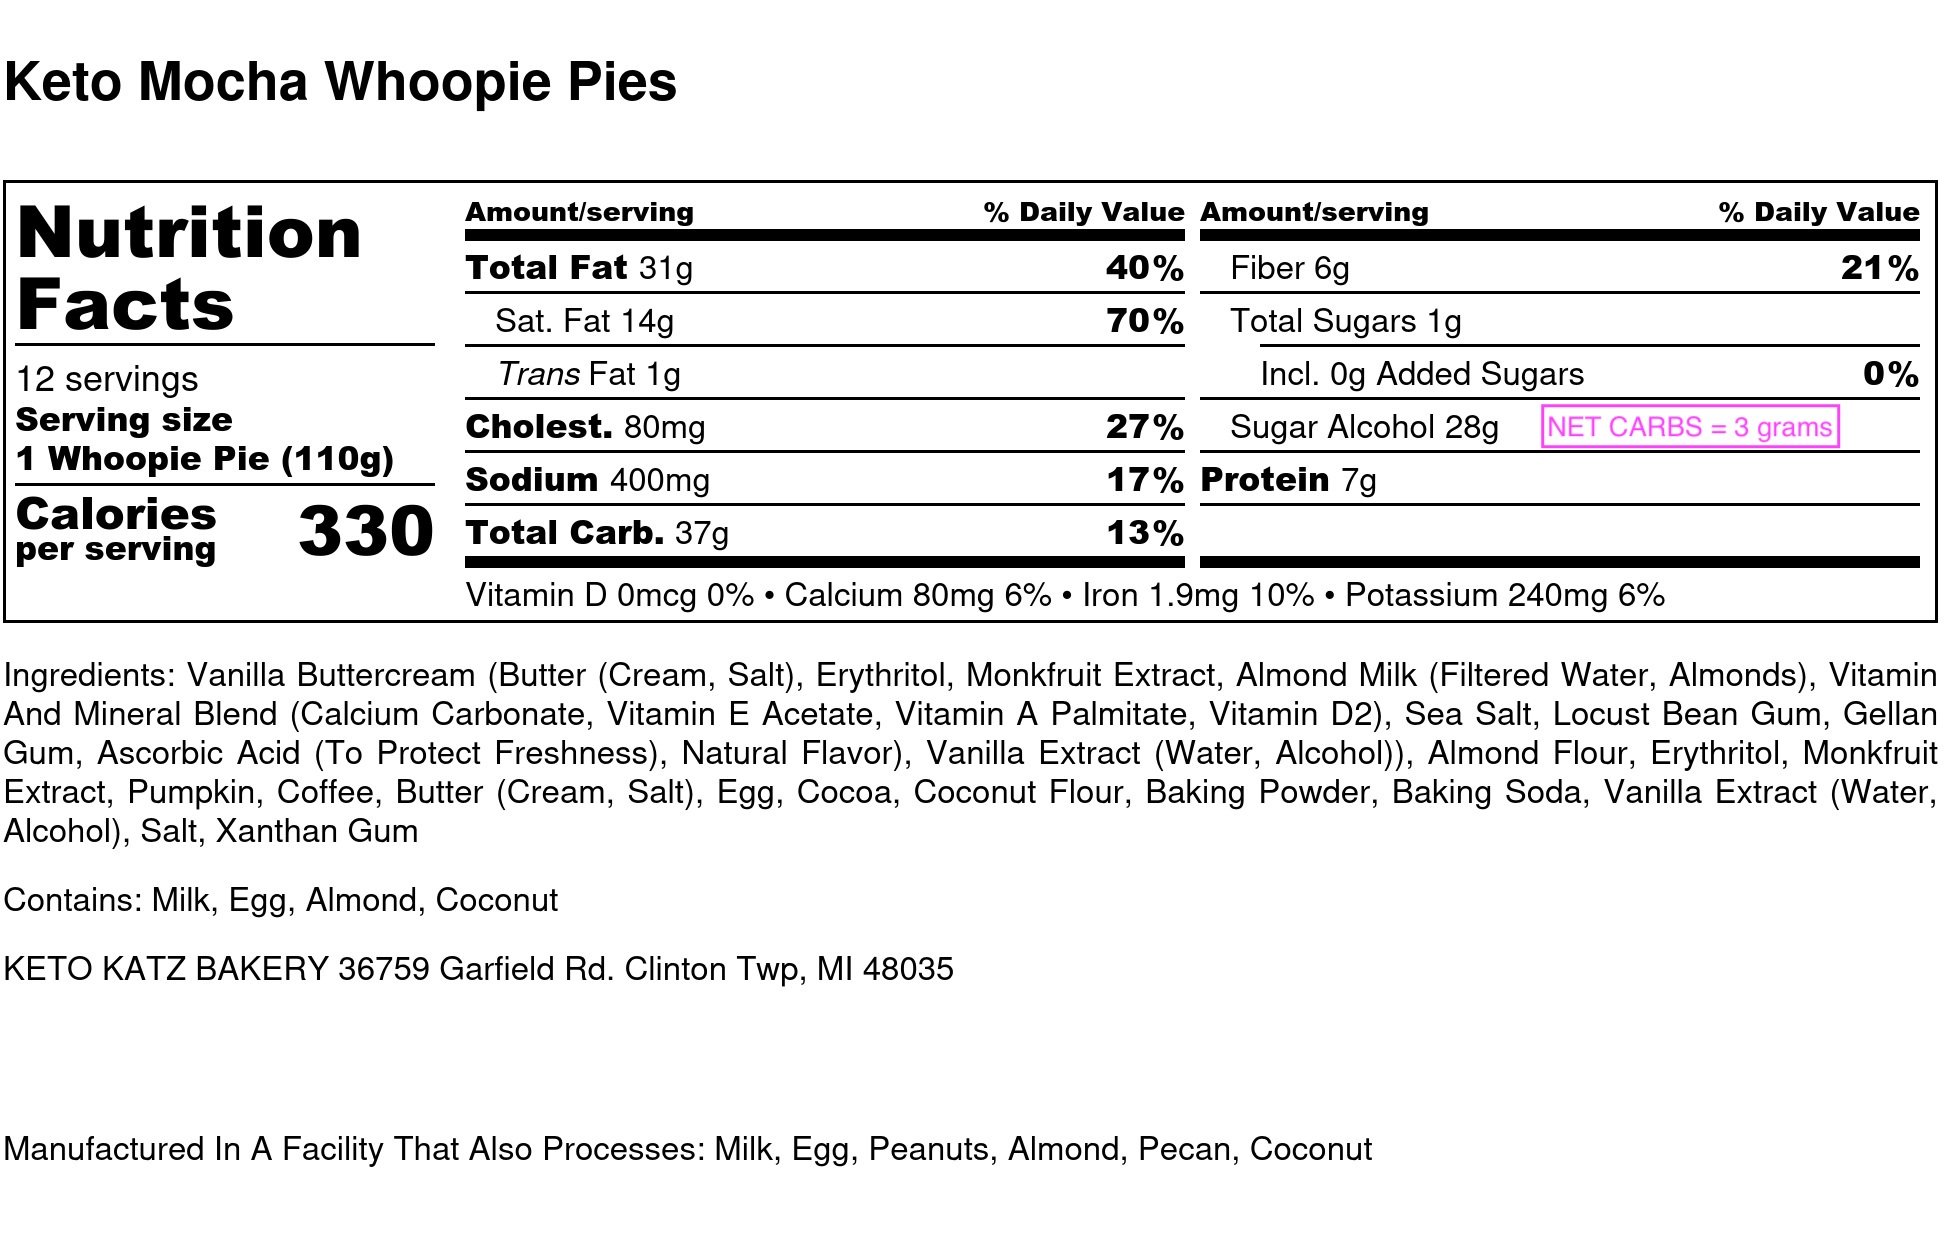 Keto Mocha Whoopie Pies - Nutrition Label.jpg